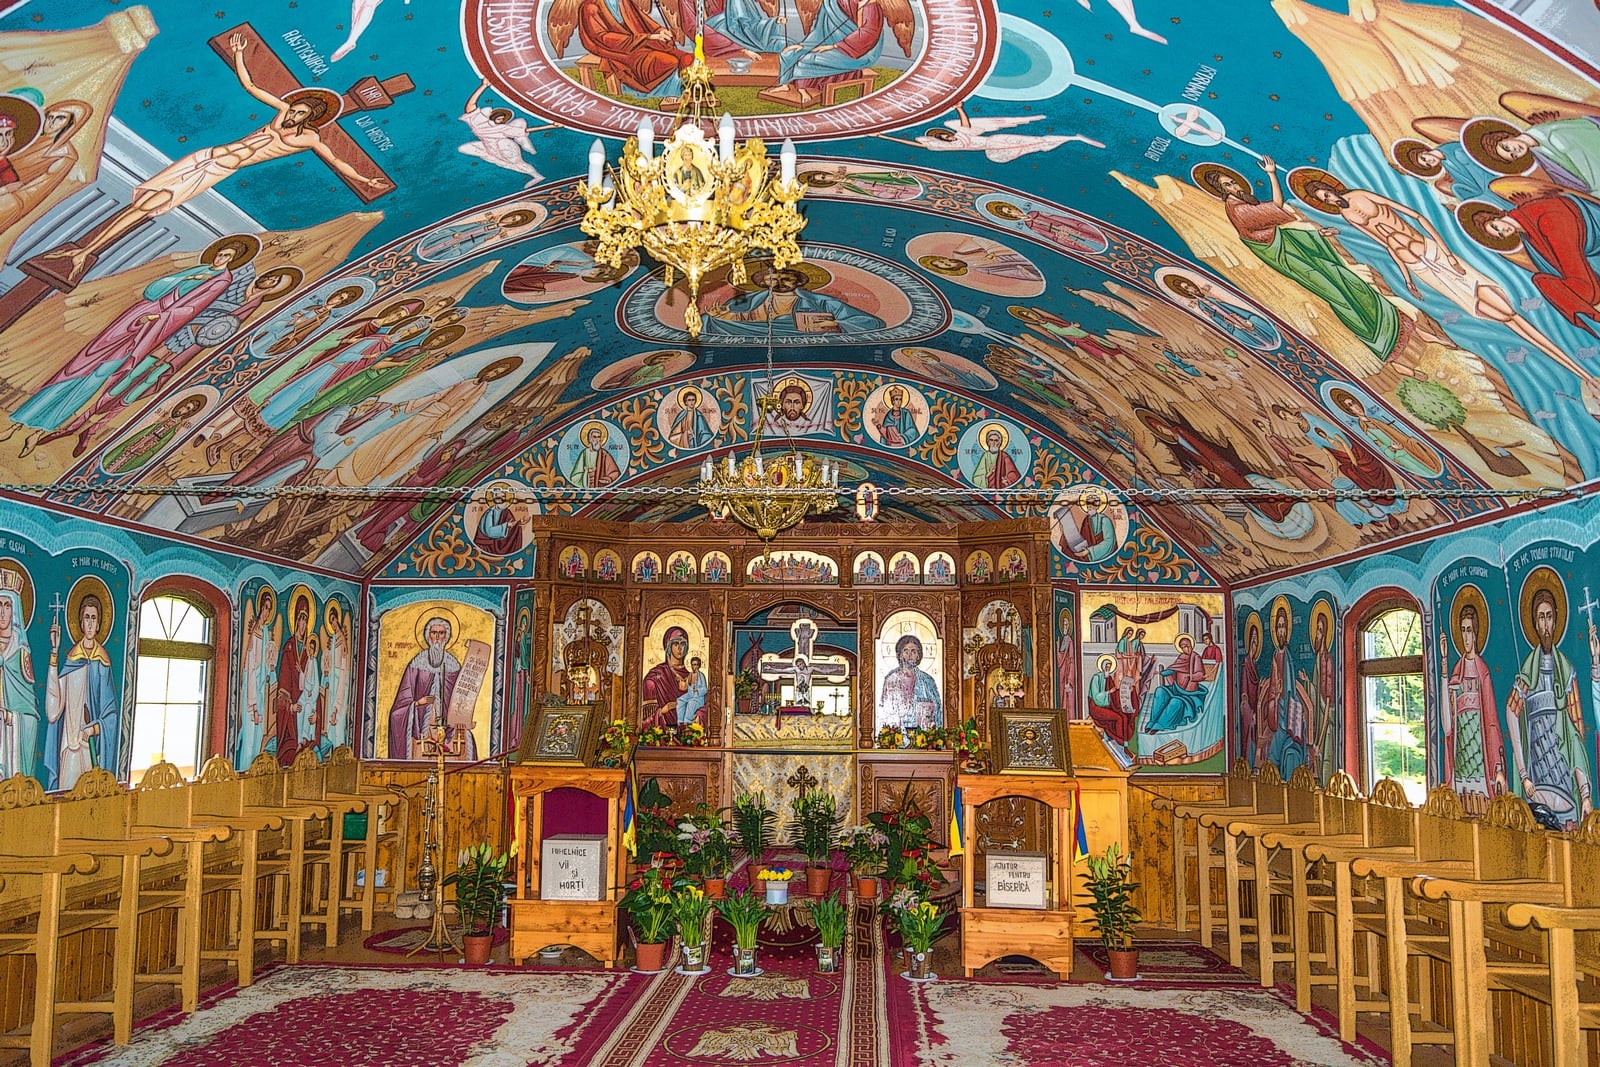  Interior Biserica Calineasa - Oradea - Bihor -Instantanee